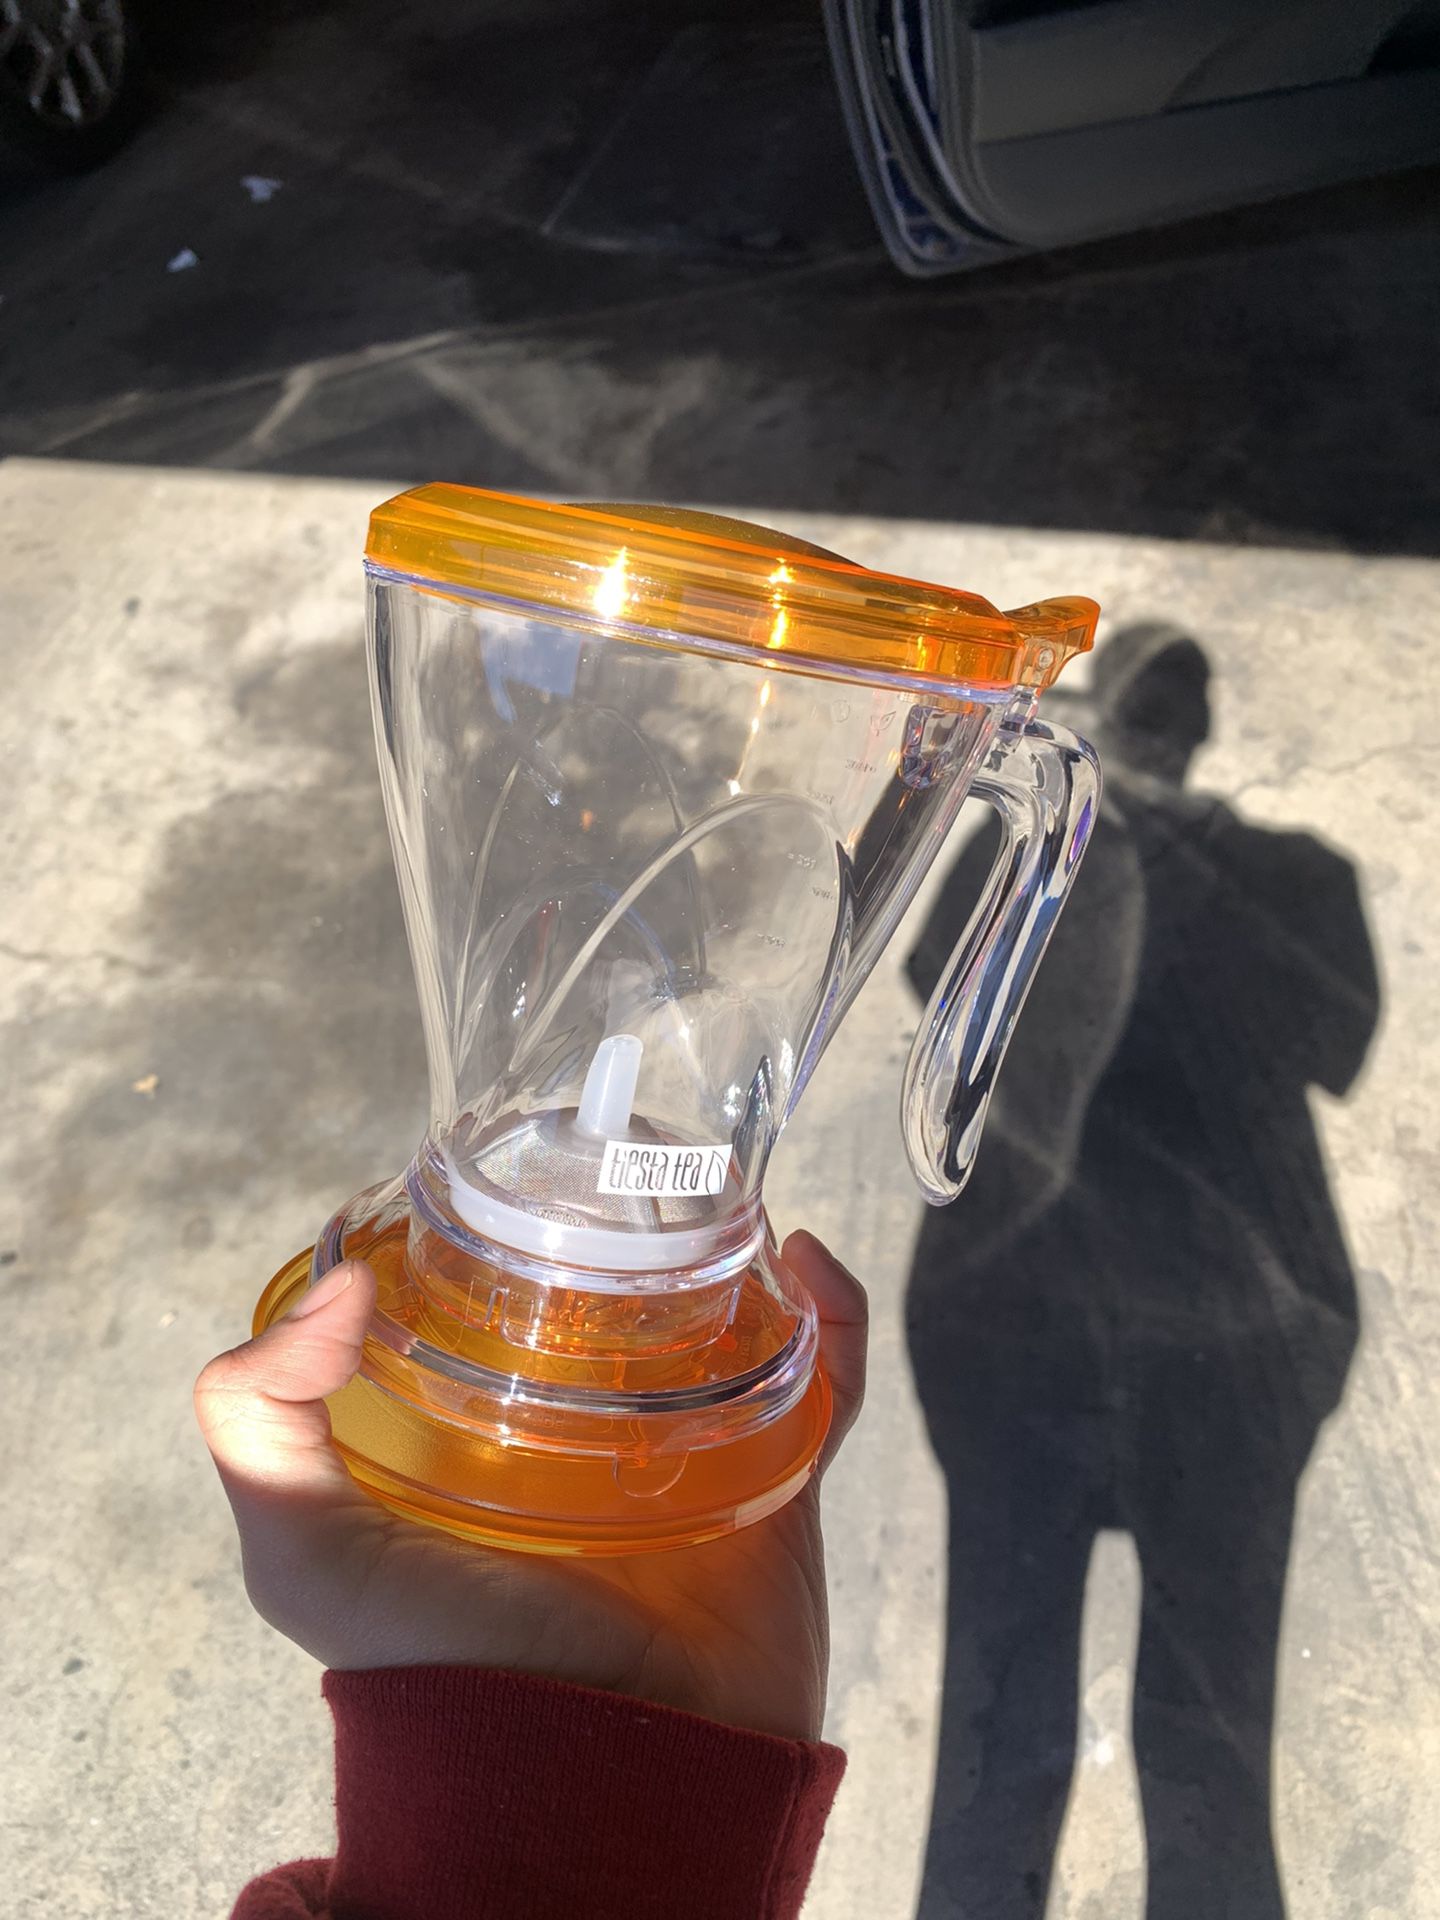 West Bend 2 Quart Iced Tea Maker for Sale in Long Beach, CA - OfferUp